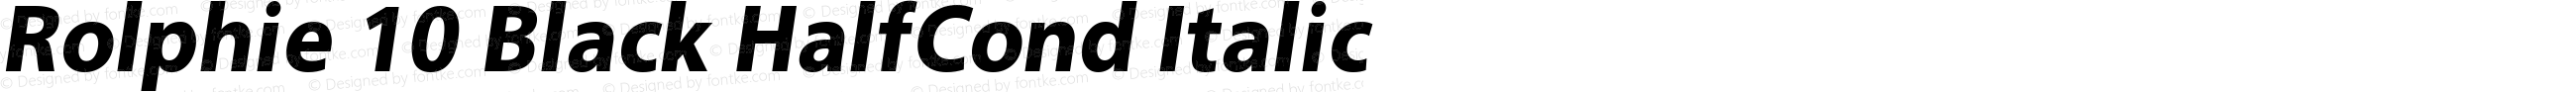 Rolphie Black HalfCond Italic